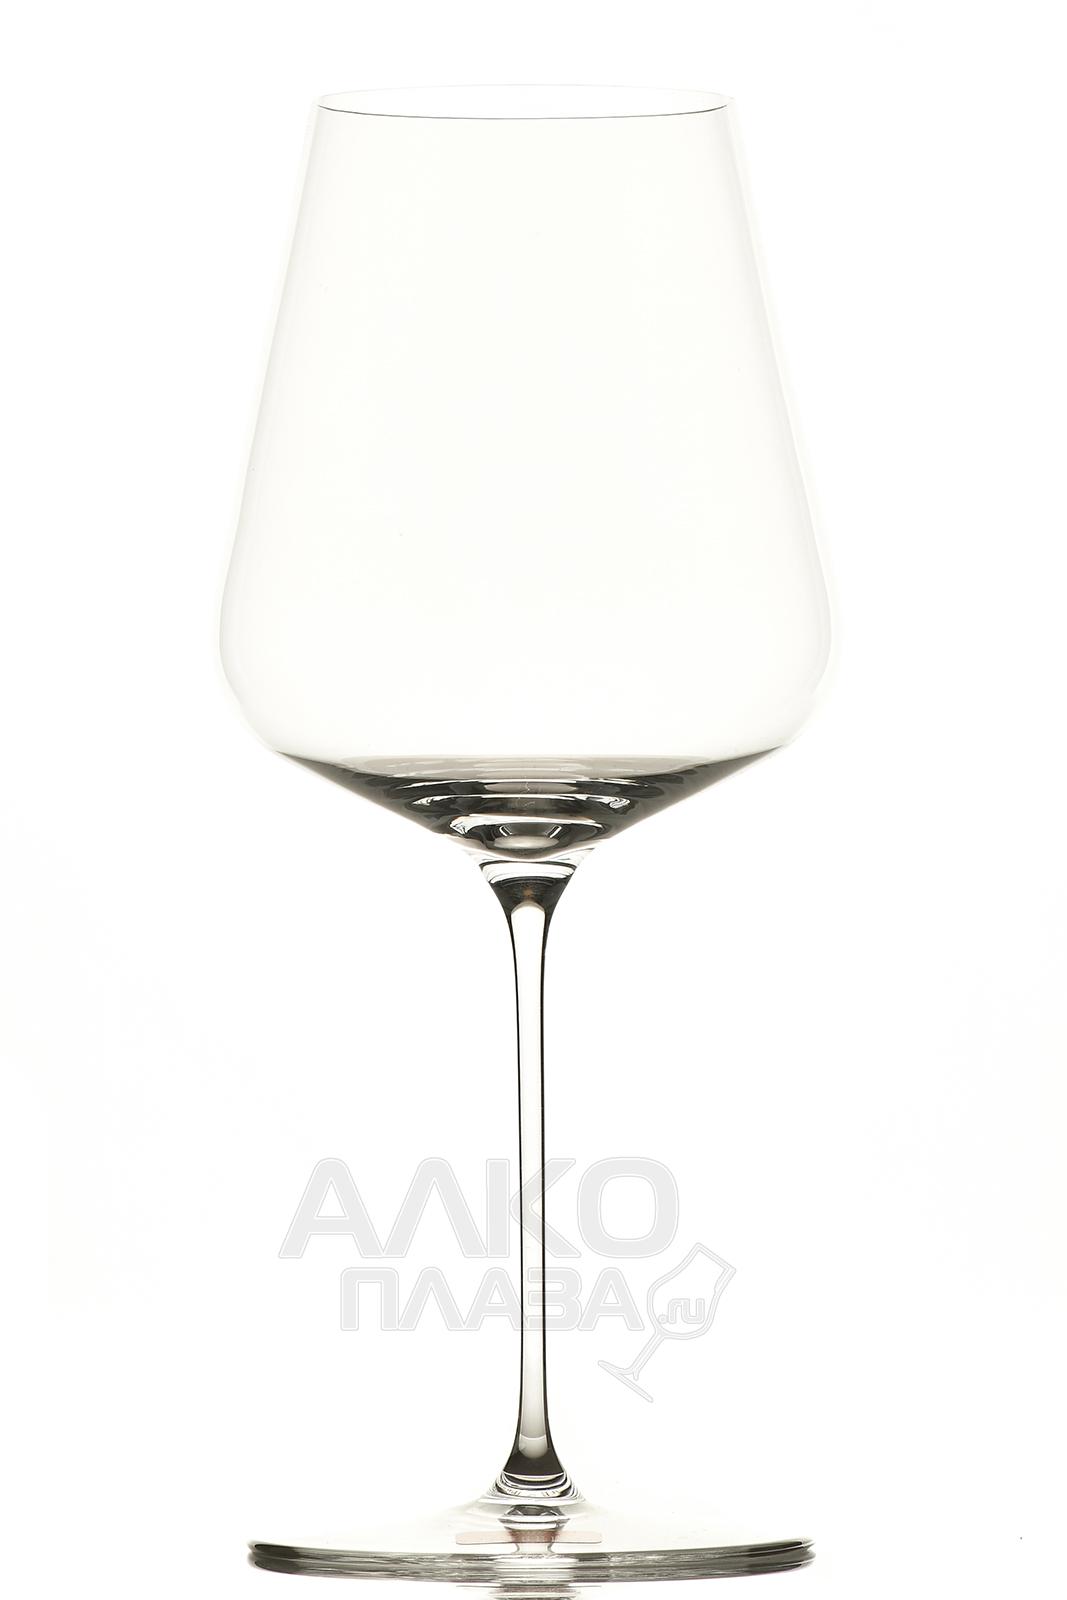 Spiegelau Definition Bordeaux - бокал Шпигелау Дефинишн Бордо 1350135 хрустальное стекло 750 мл